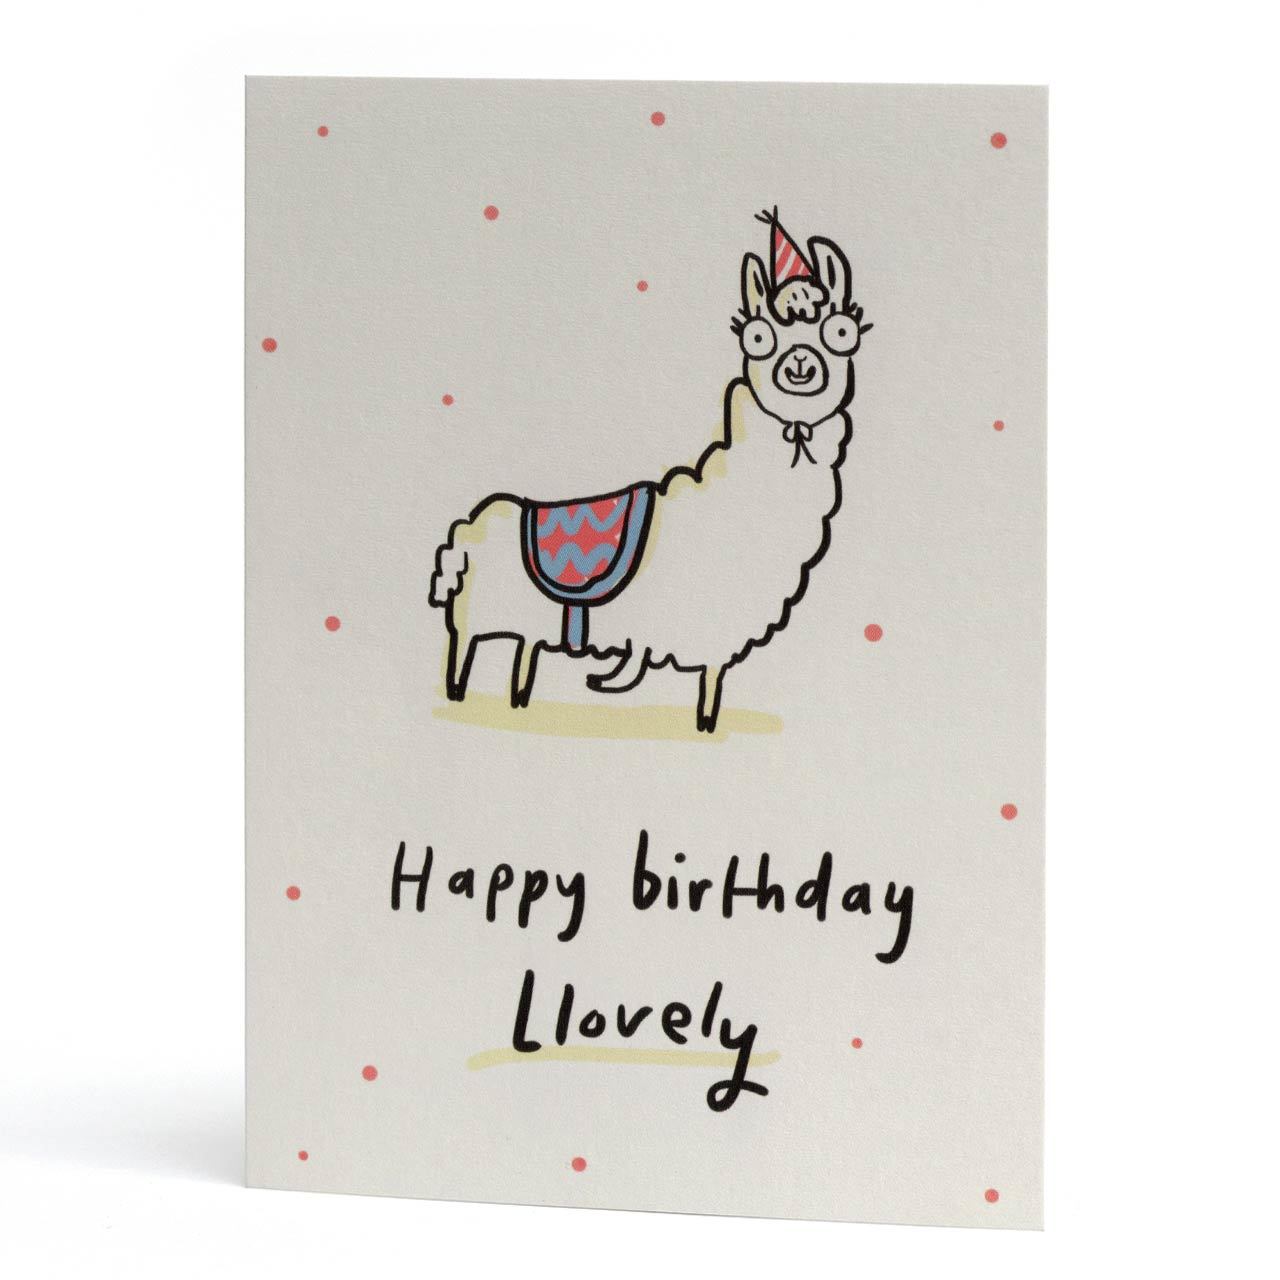 Happy Birthday Llovely Greeting Card